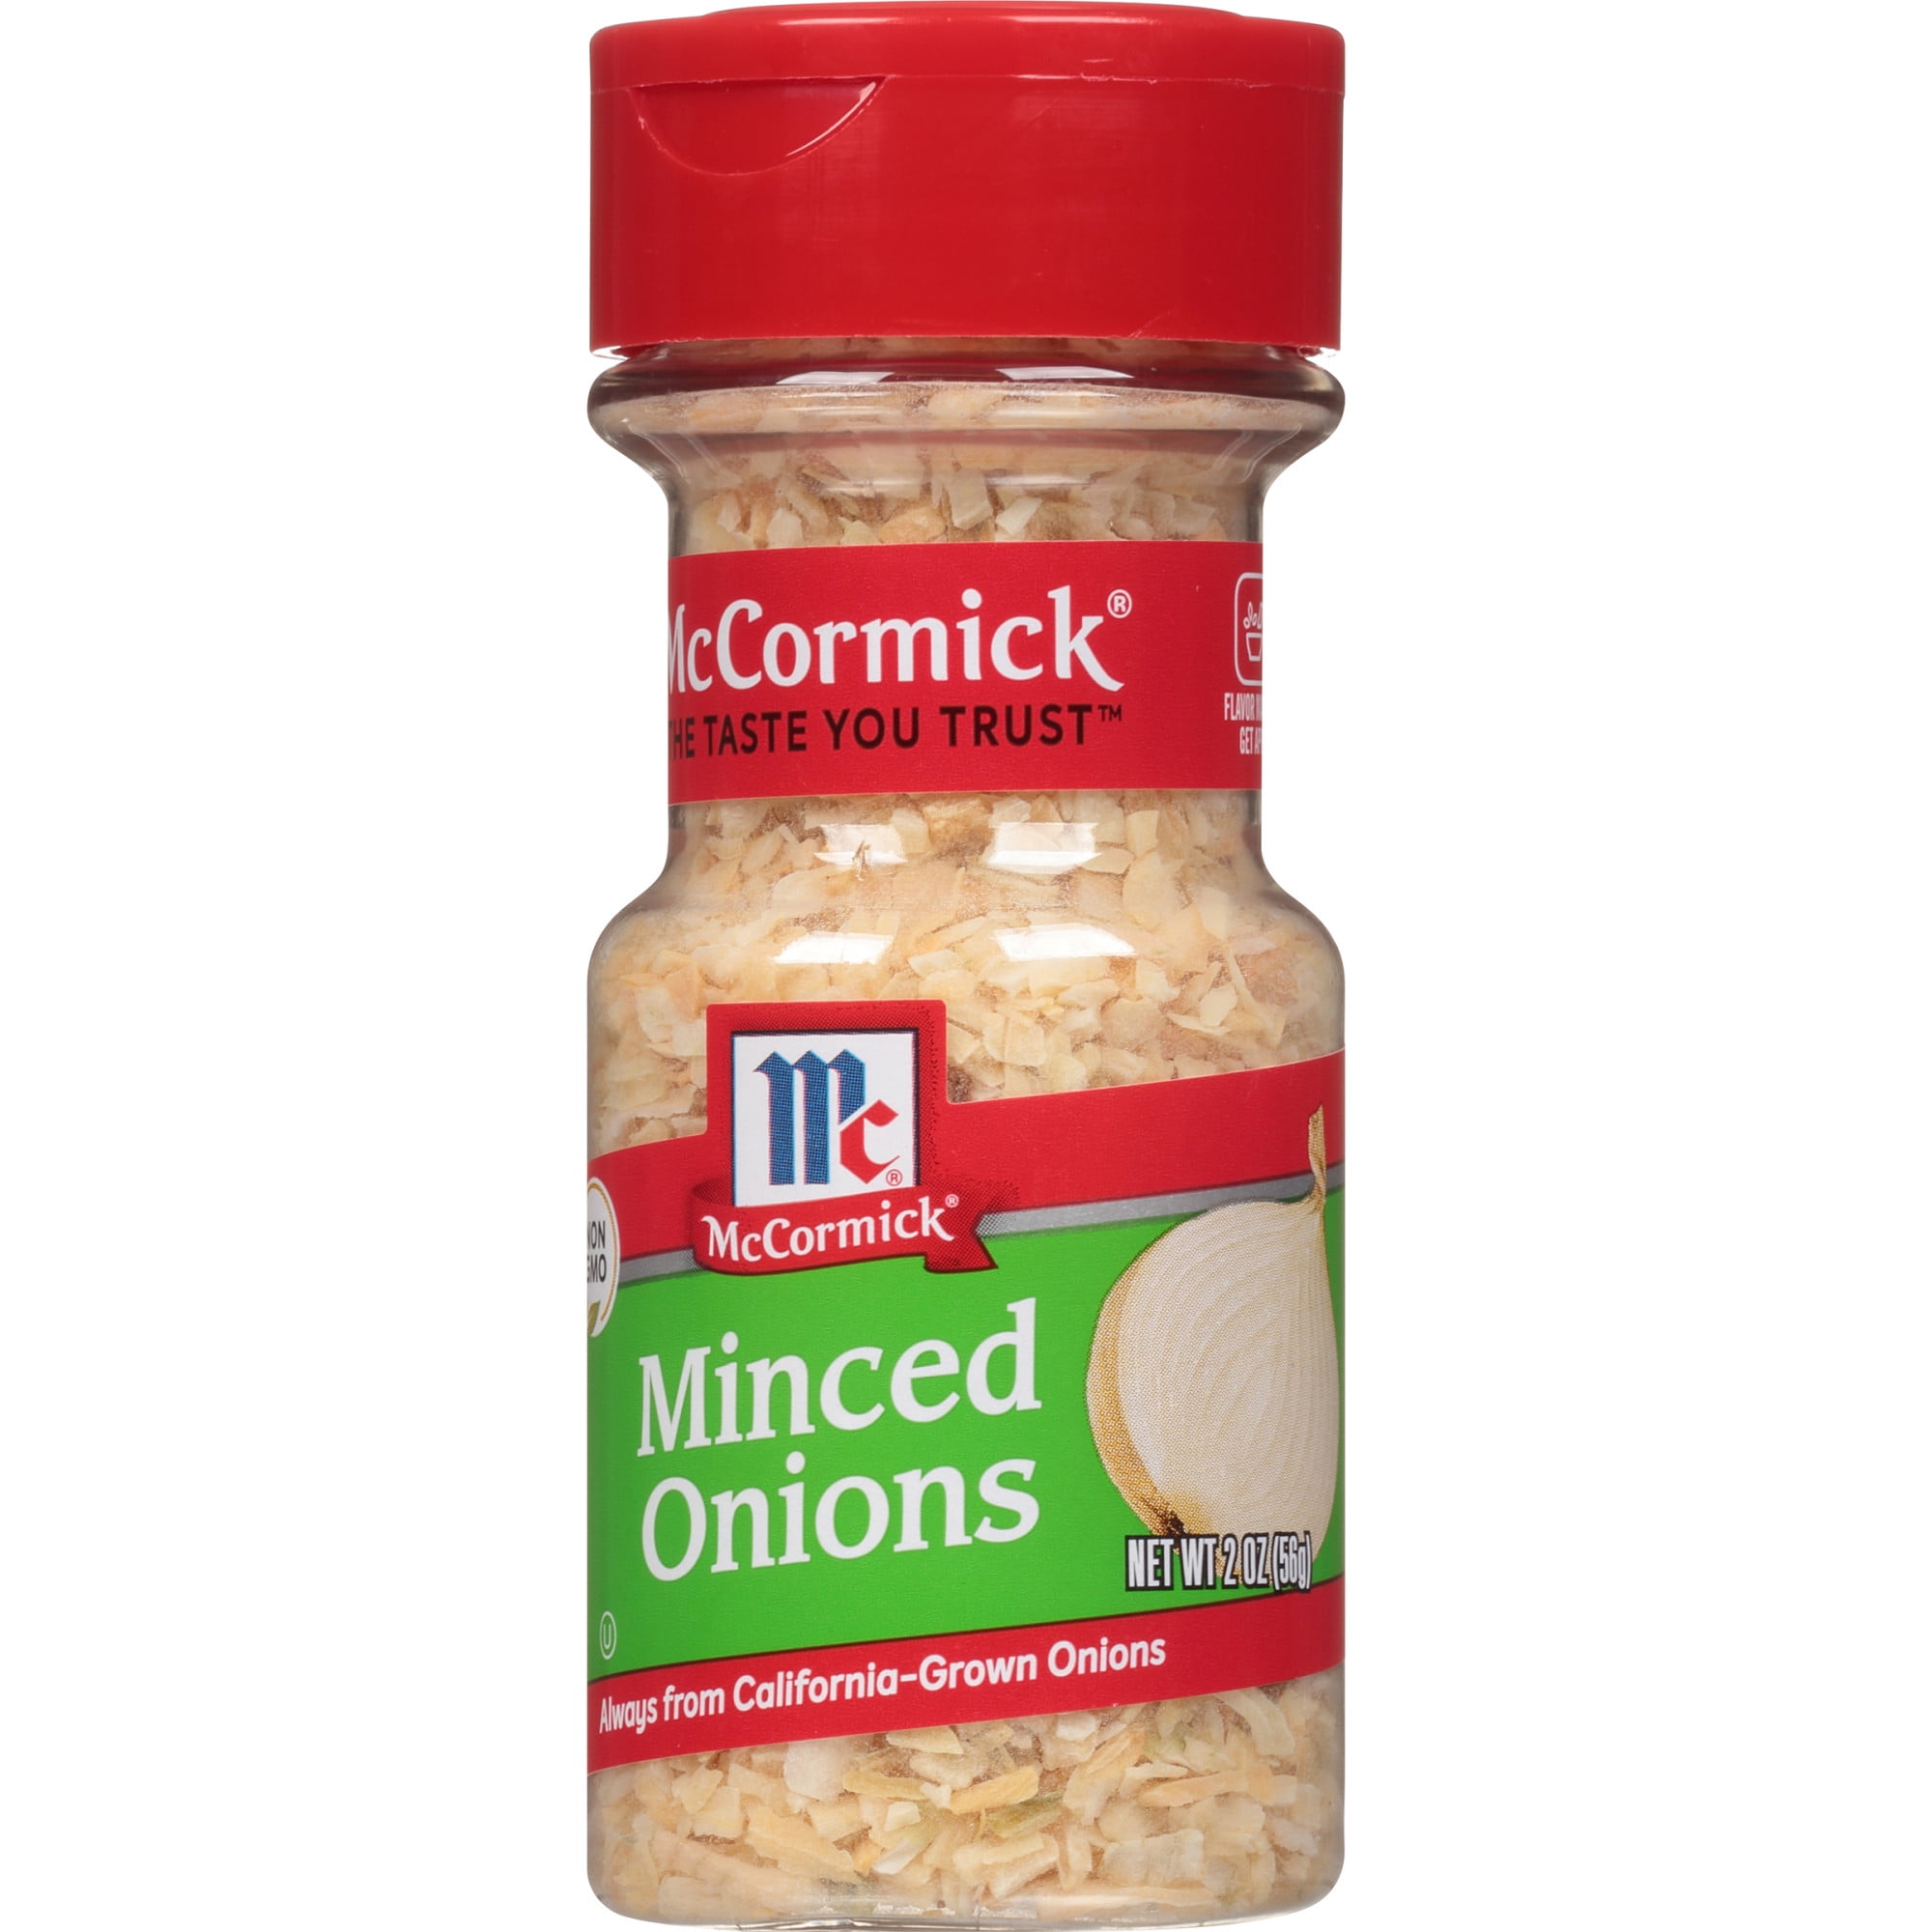 Easy Onion Minced Onion and Chopped Onion - Spice World Inc